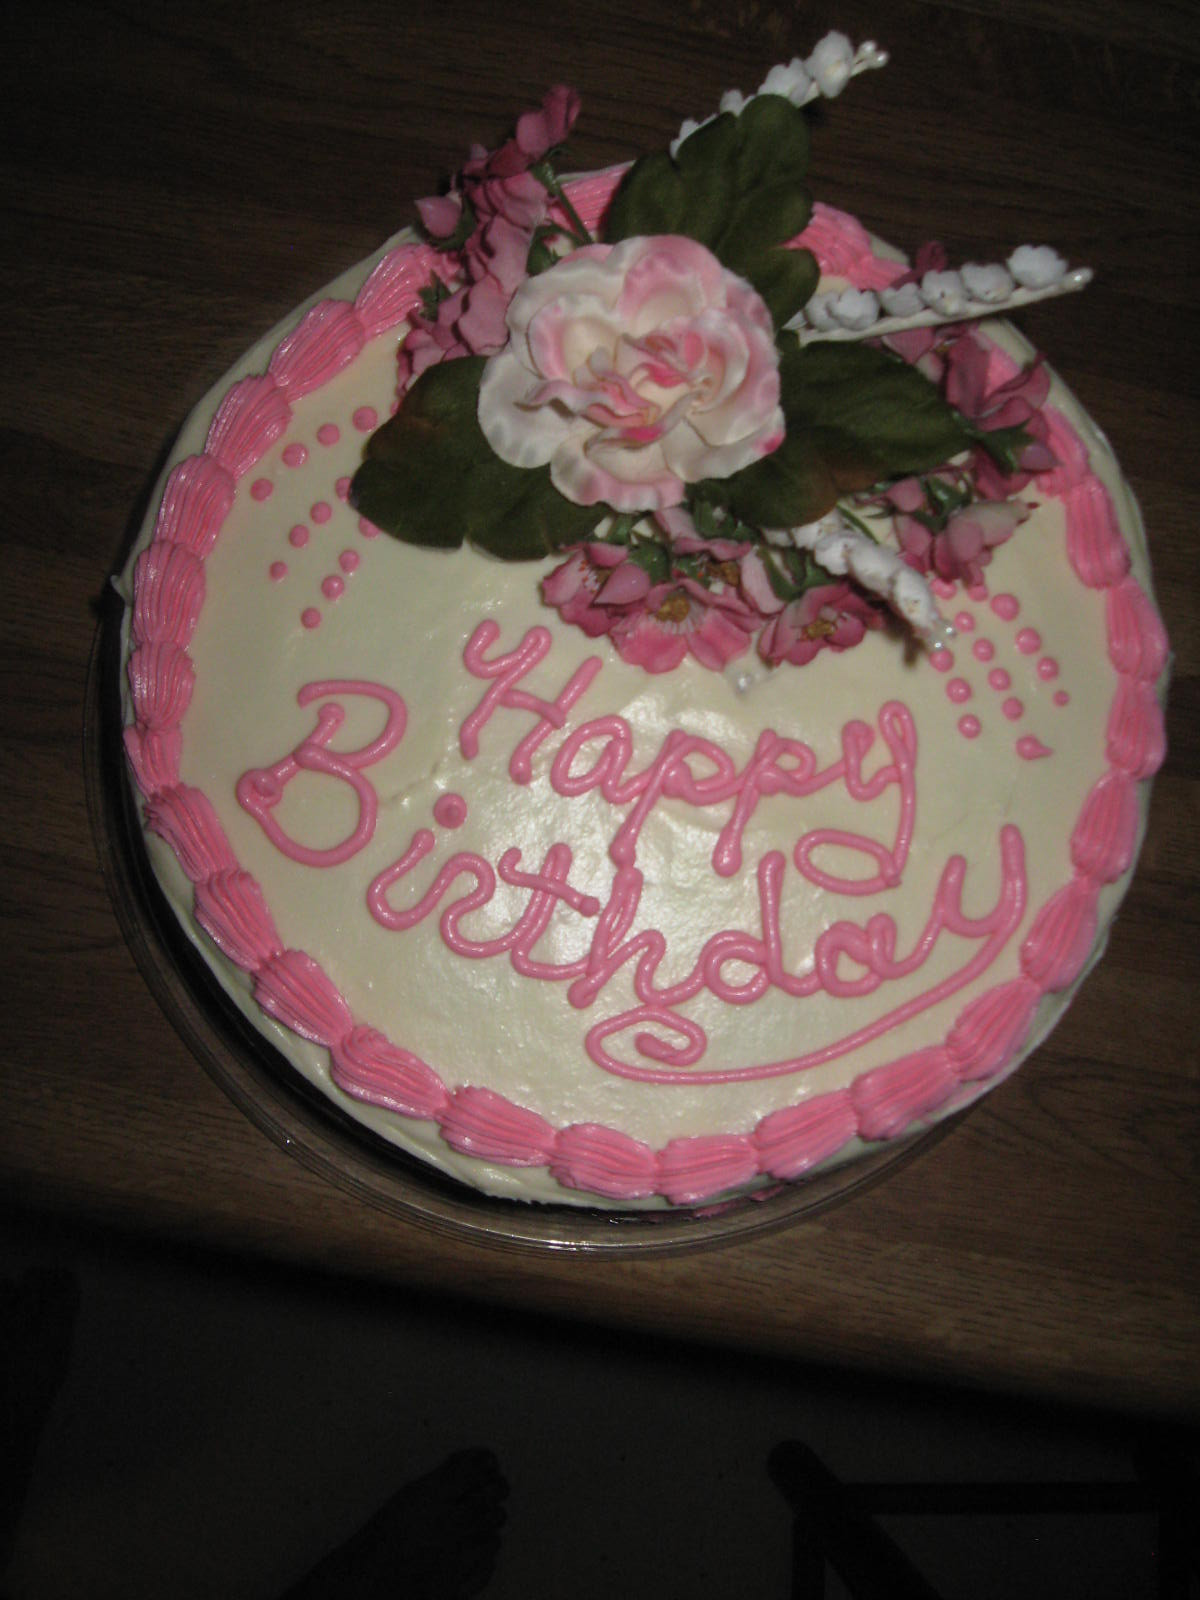 Happy Birthday Brenda Cake
 CAKES BY BRENDA Great Falls Montana September 2013